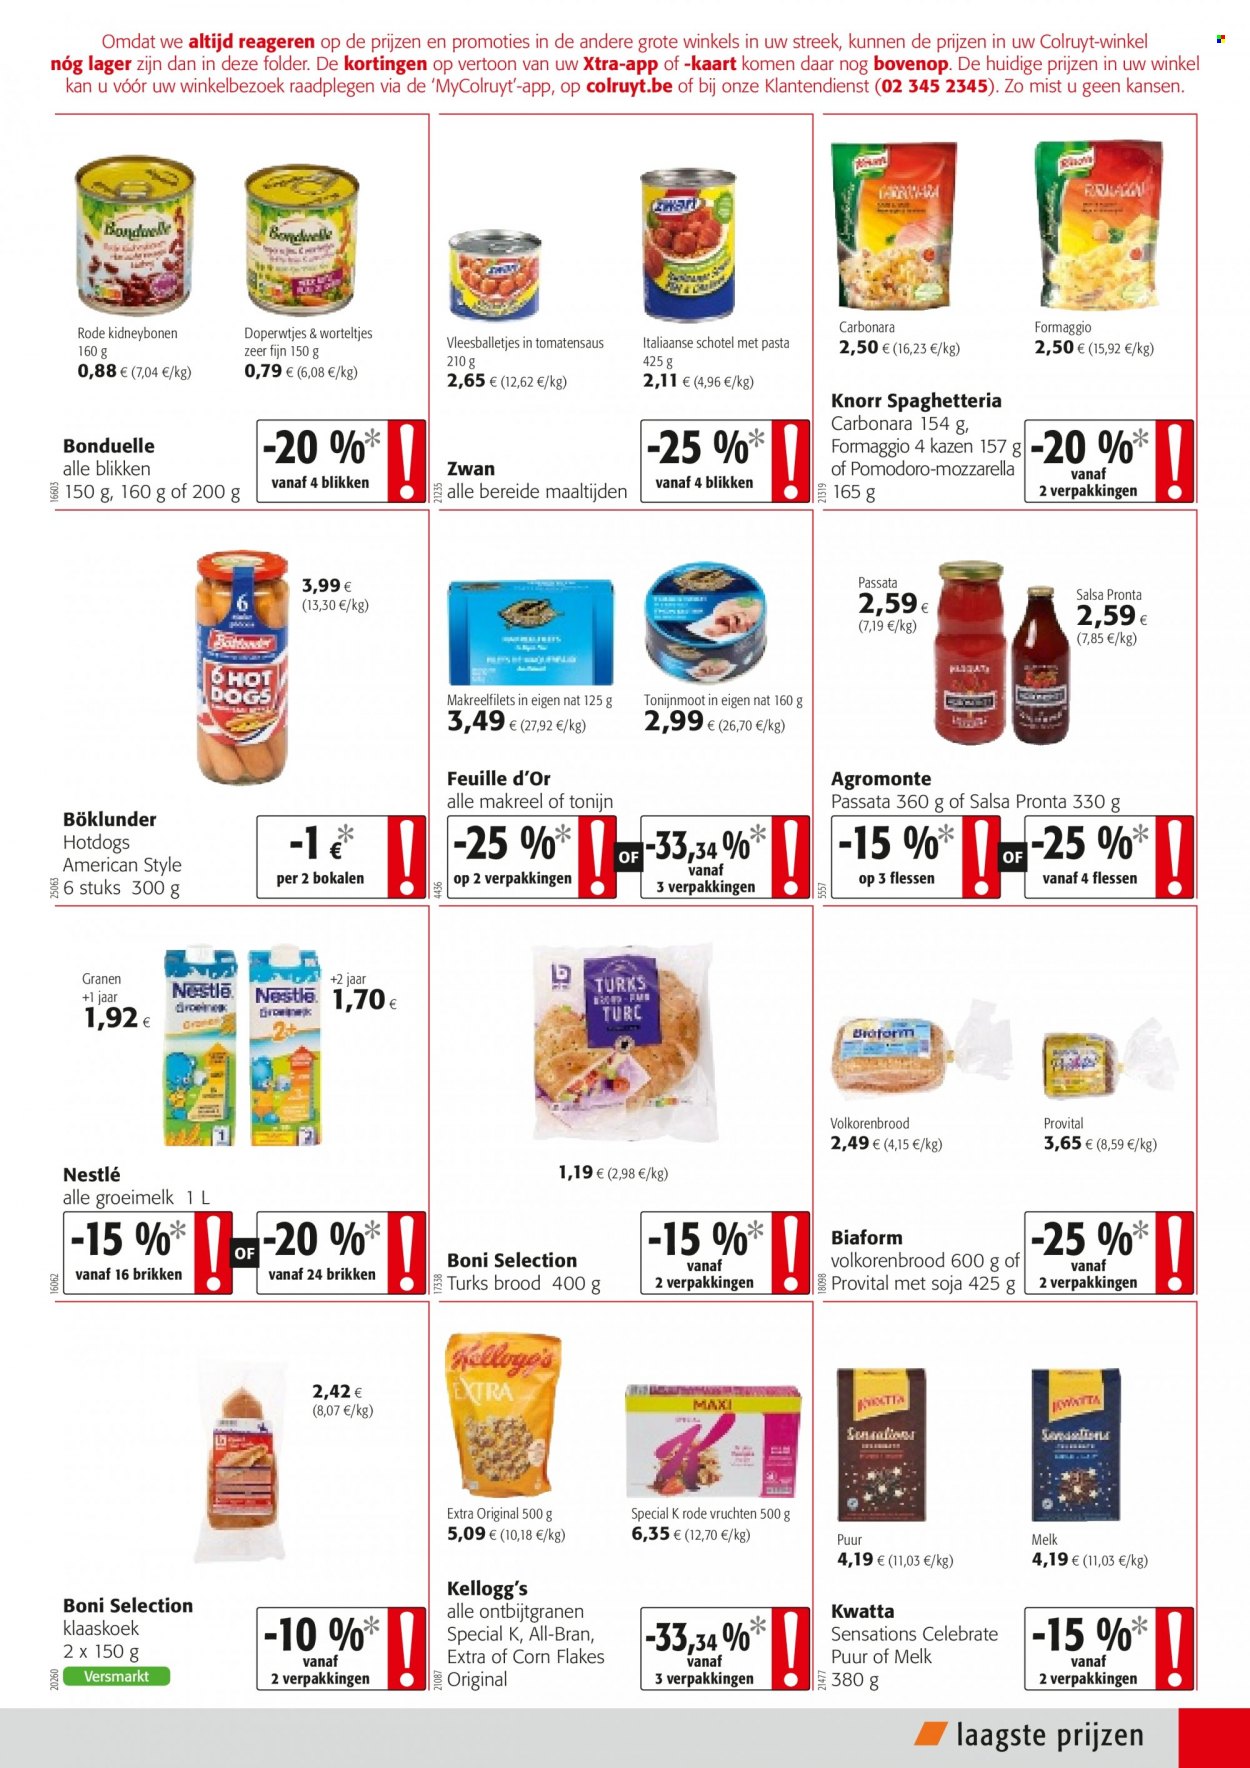 thumbnail - Colruyt-aanbieding - 17/11/2021 - 30/11/2021 -  producten in de aanbieding - brood, rode vruchten, makreel, tonijn, Knorr, mozzarella, melk, Bonduelle, Nestlé, kidneybonen, tomatensaus, Kellogg's, pasta. Pagina 9.